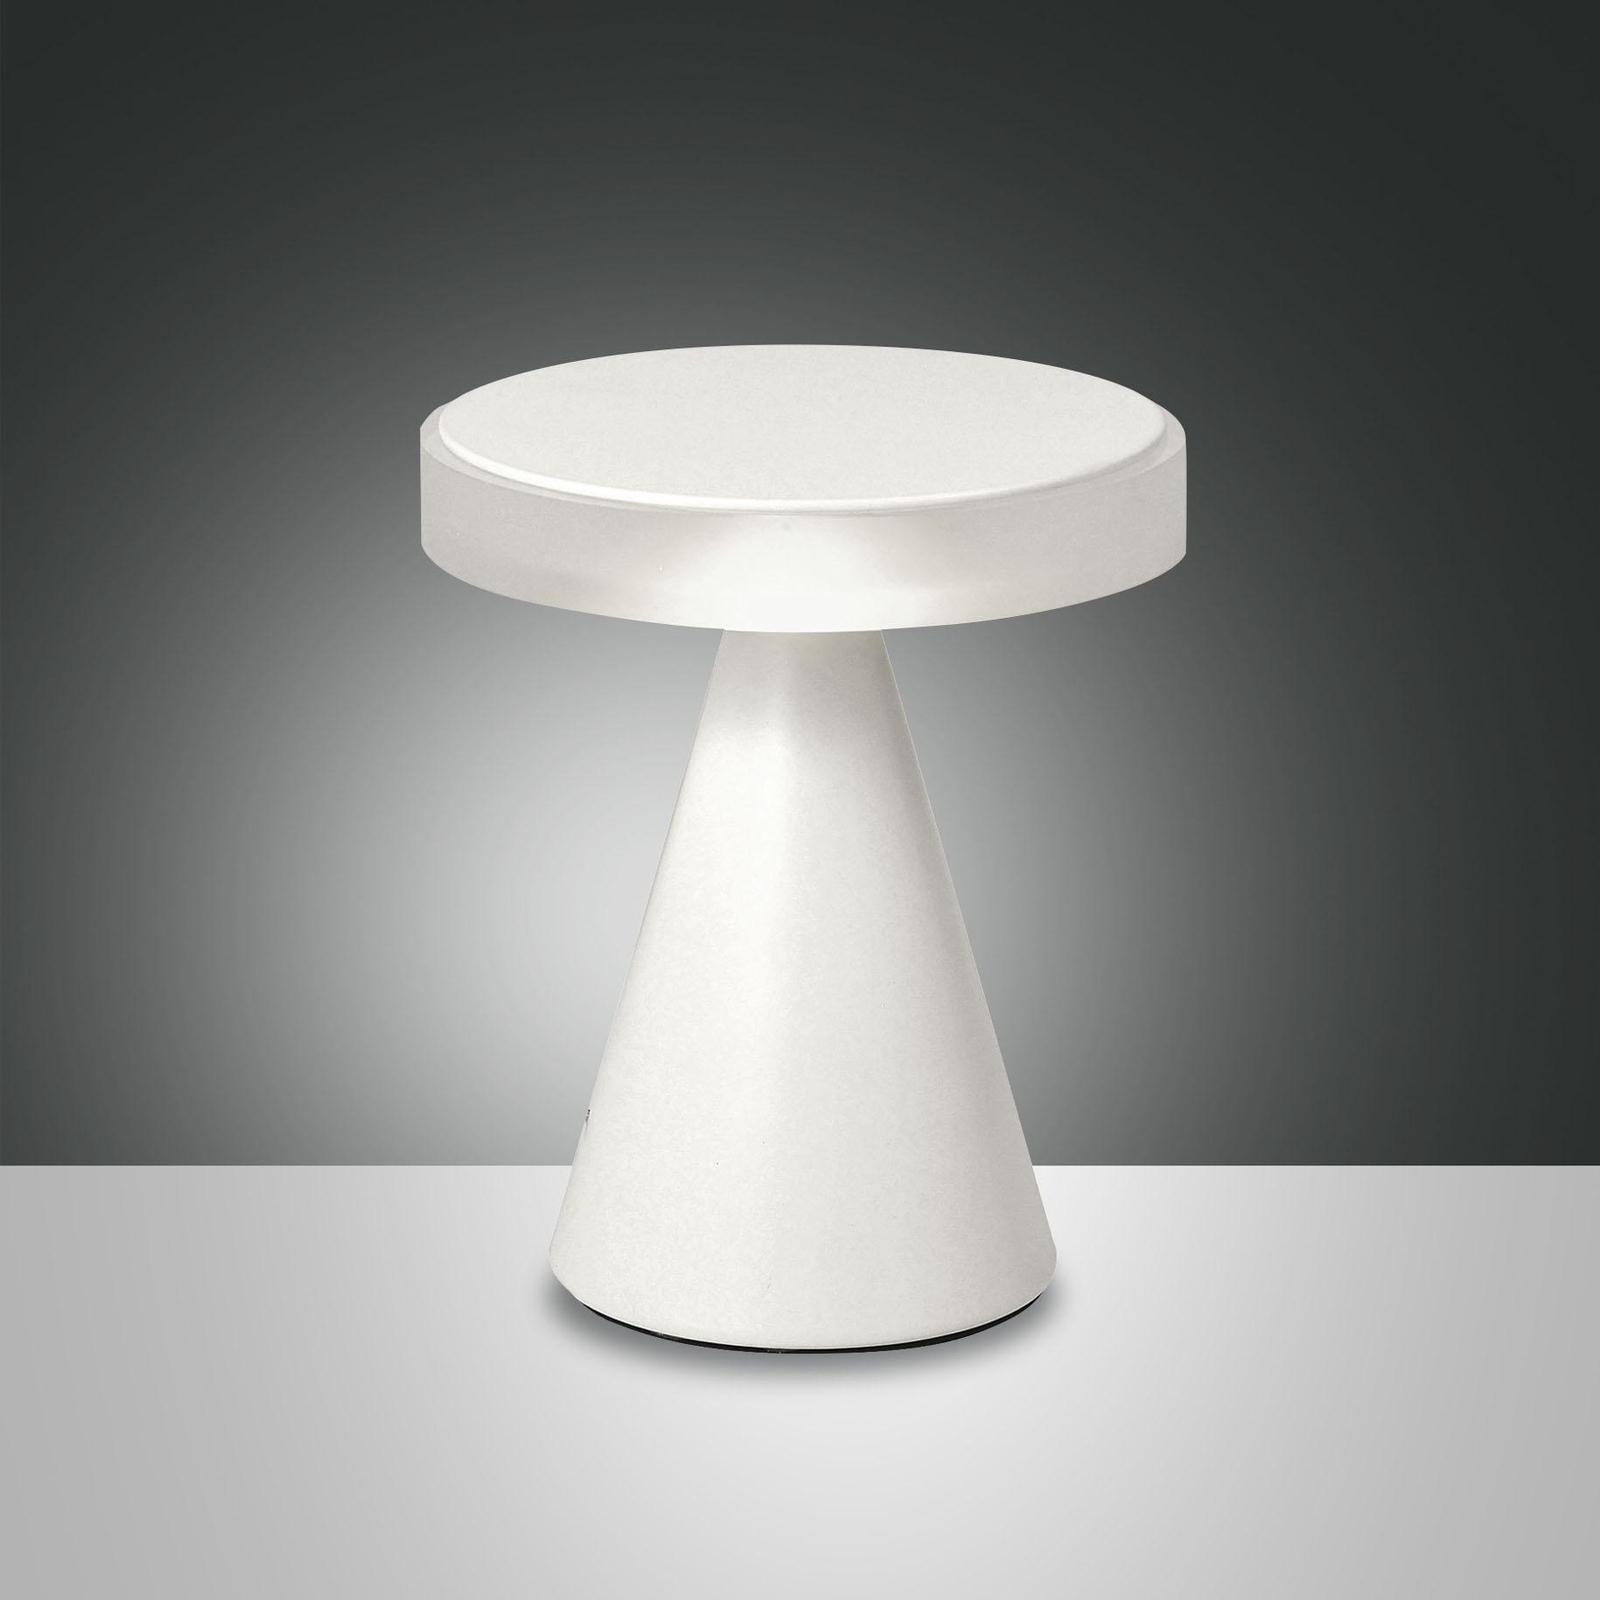 Candeeiro de mesa Neutra LED, altura 20 cm, branco, regulador de